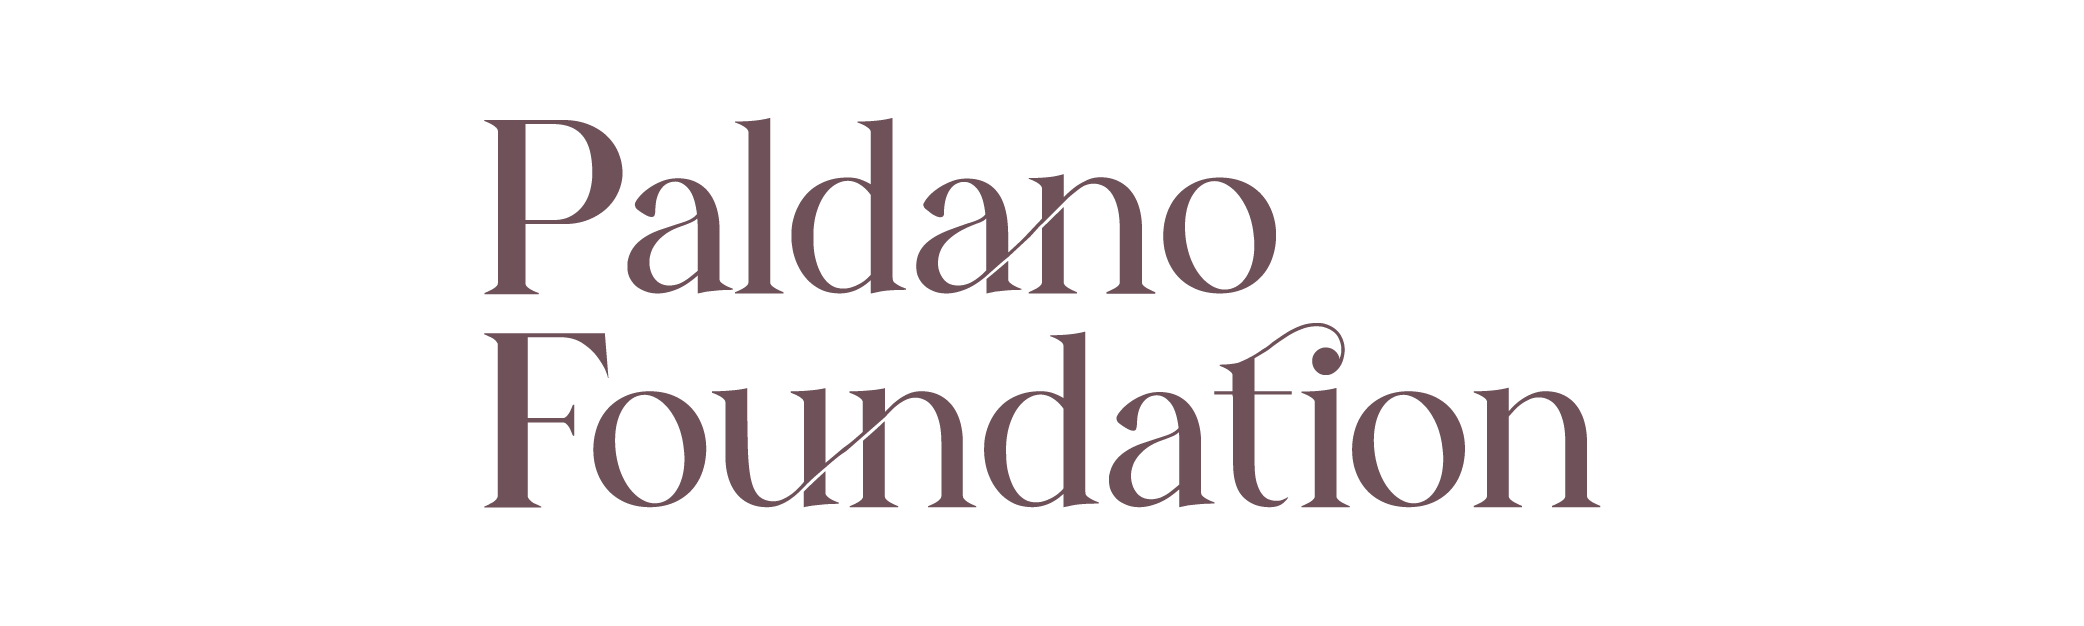 Paldano Foundation